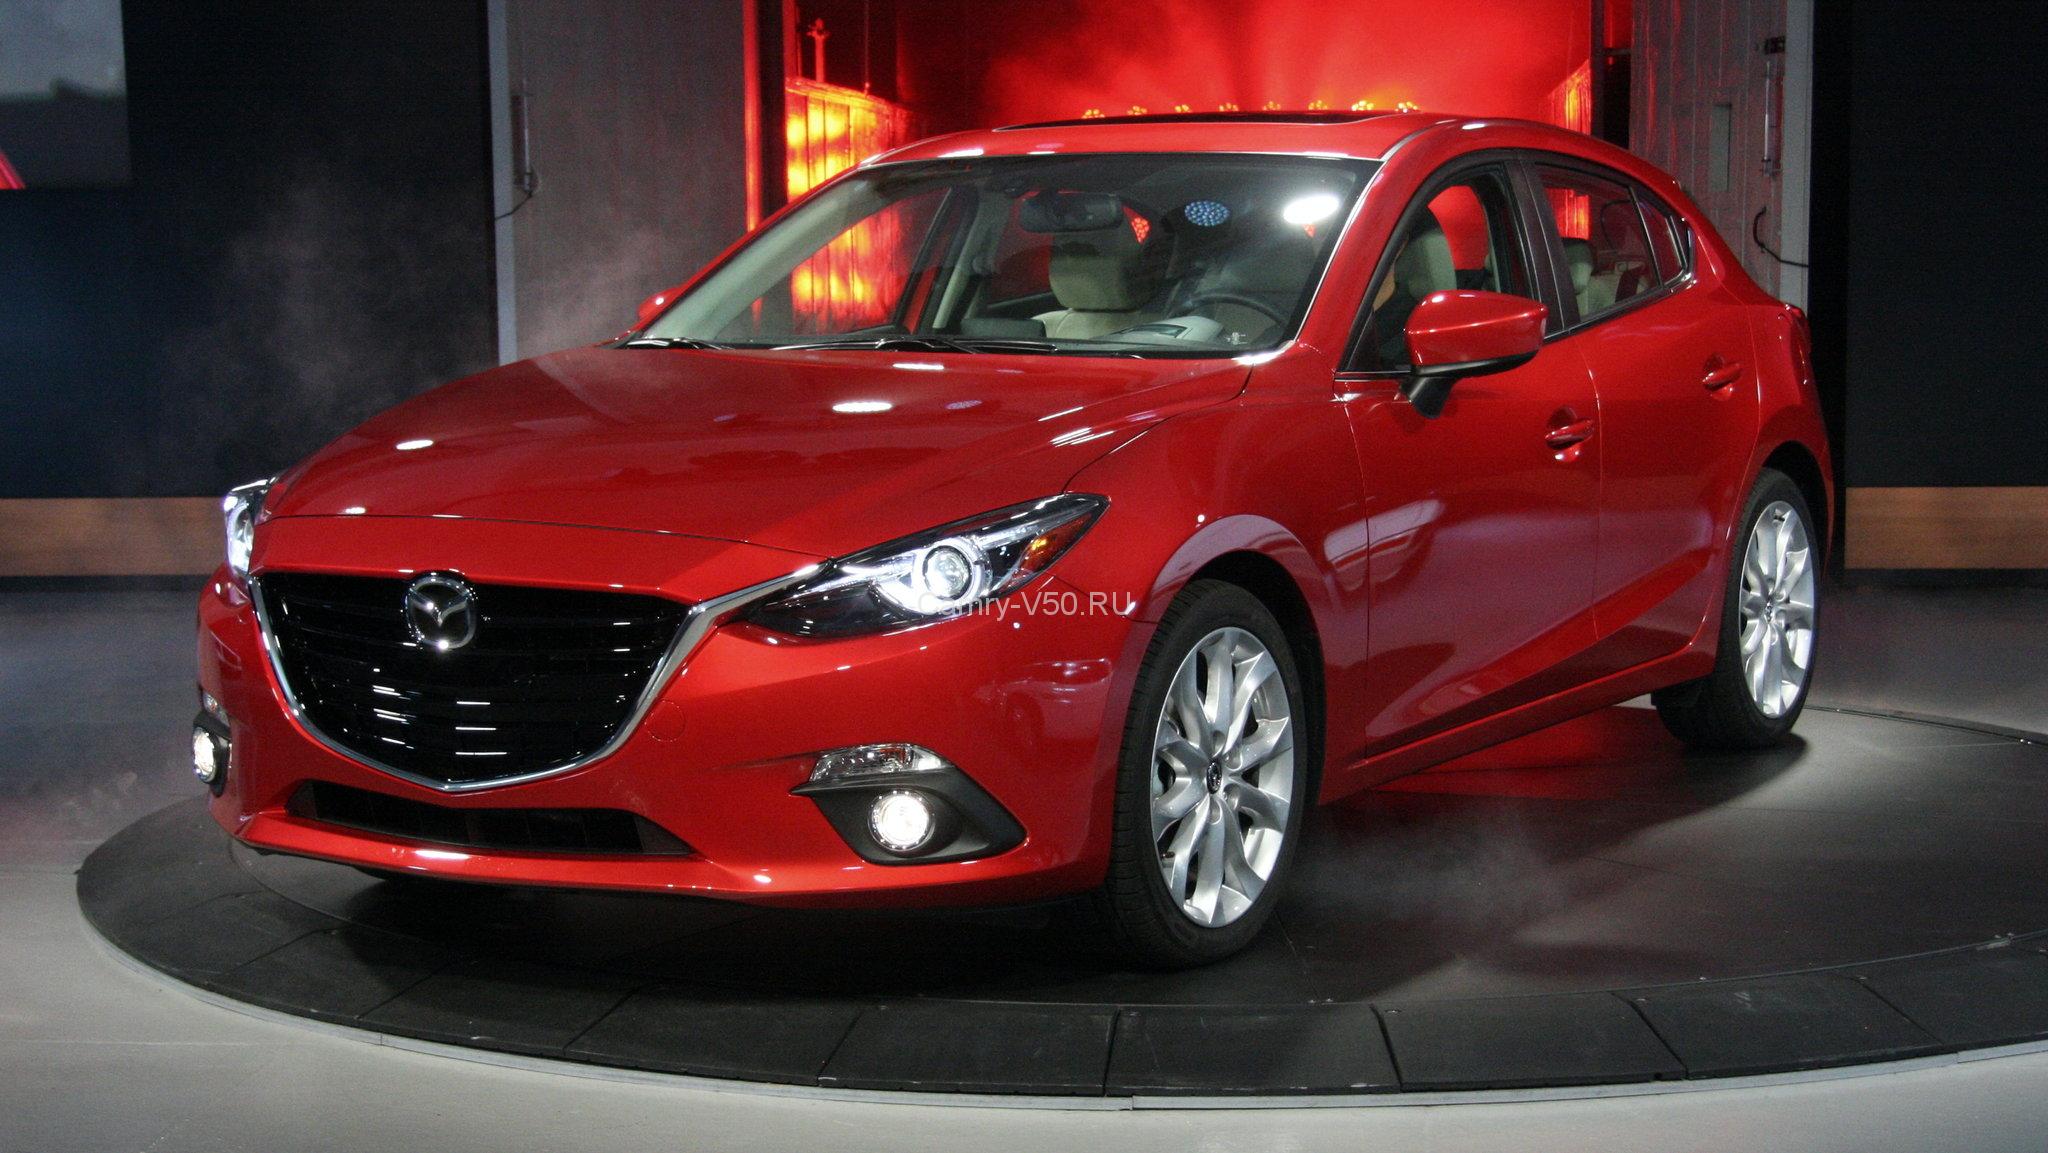 Цены новой mazda. Mazda Mazda 3 2014. Мазда 3 хэтчбек 2014г. Мазда 3 новая комплектация. Мазда 3 кузова.